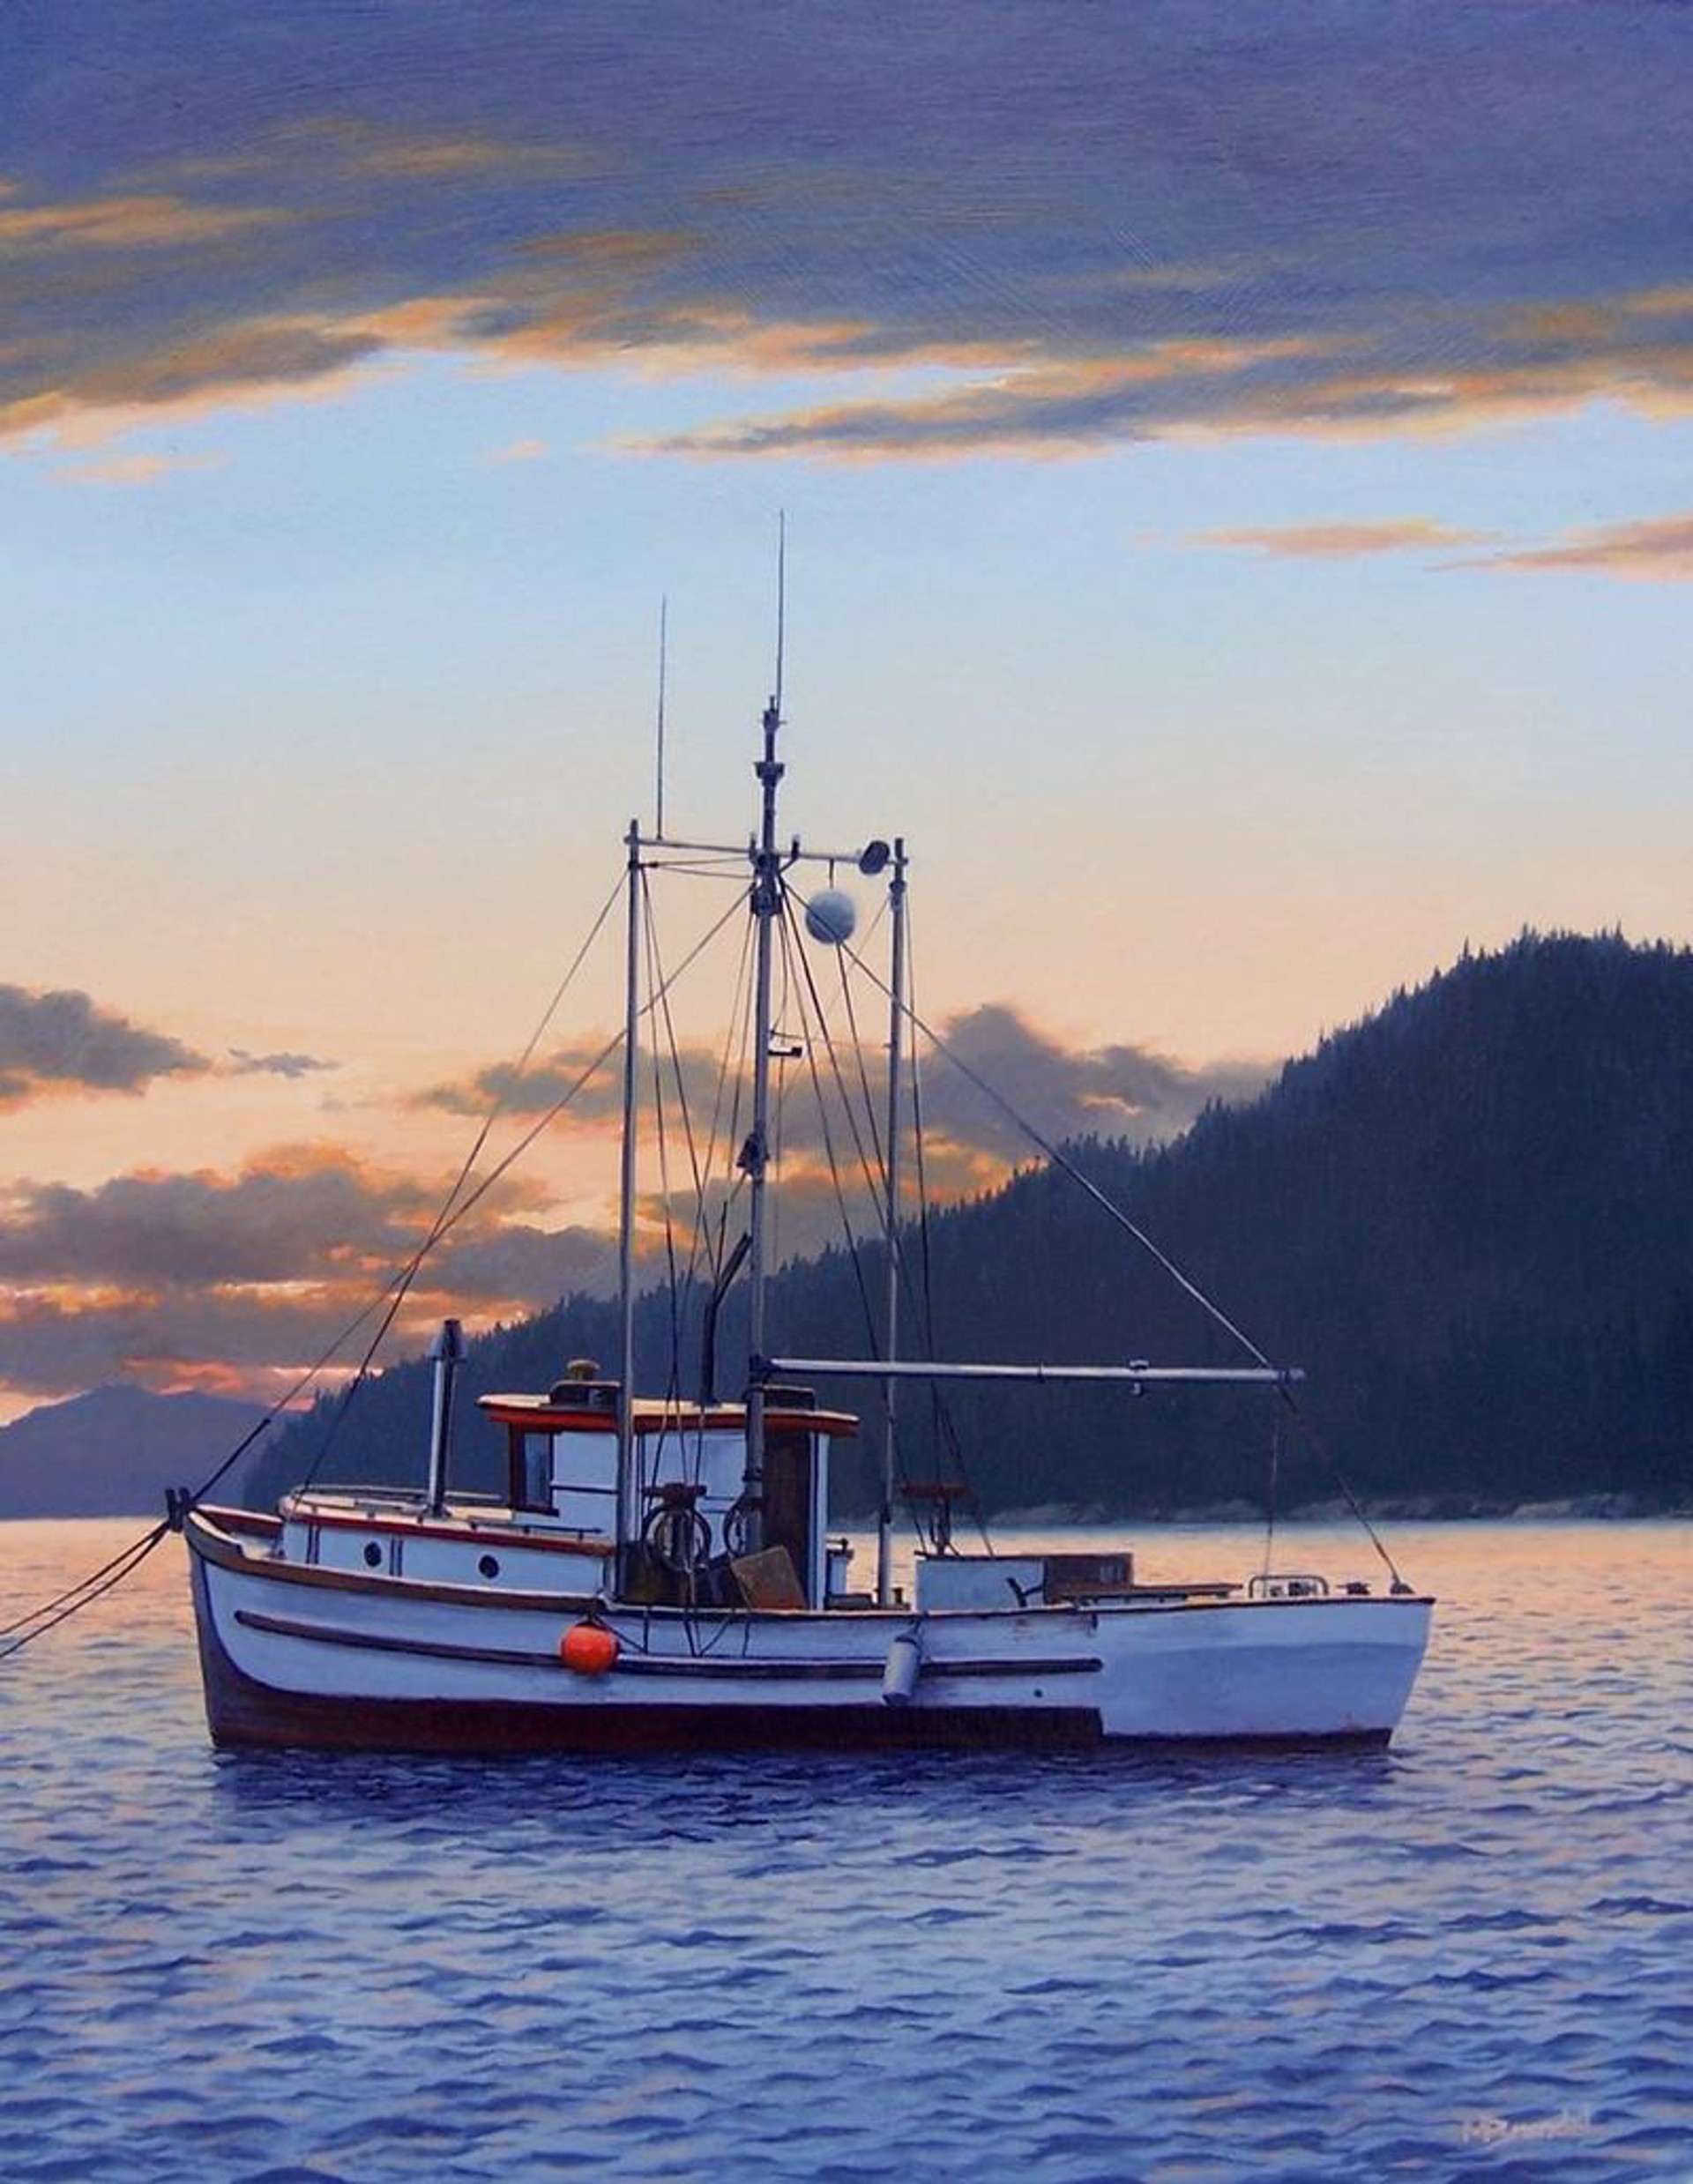 Sunset Anchorage by MERV BRANDEL